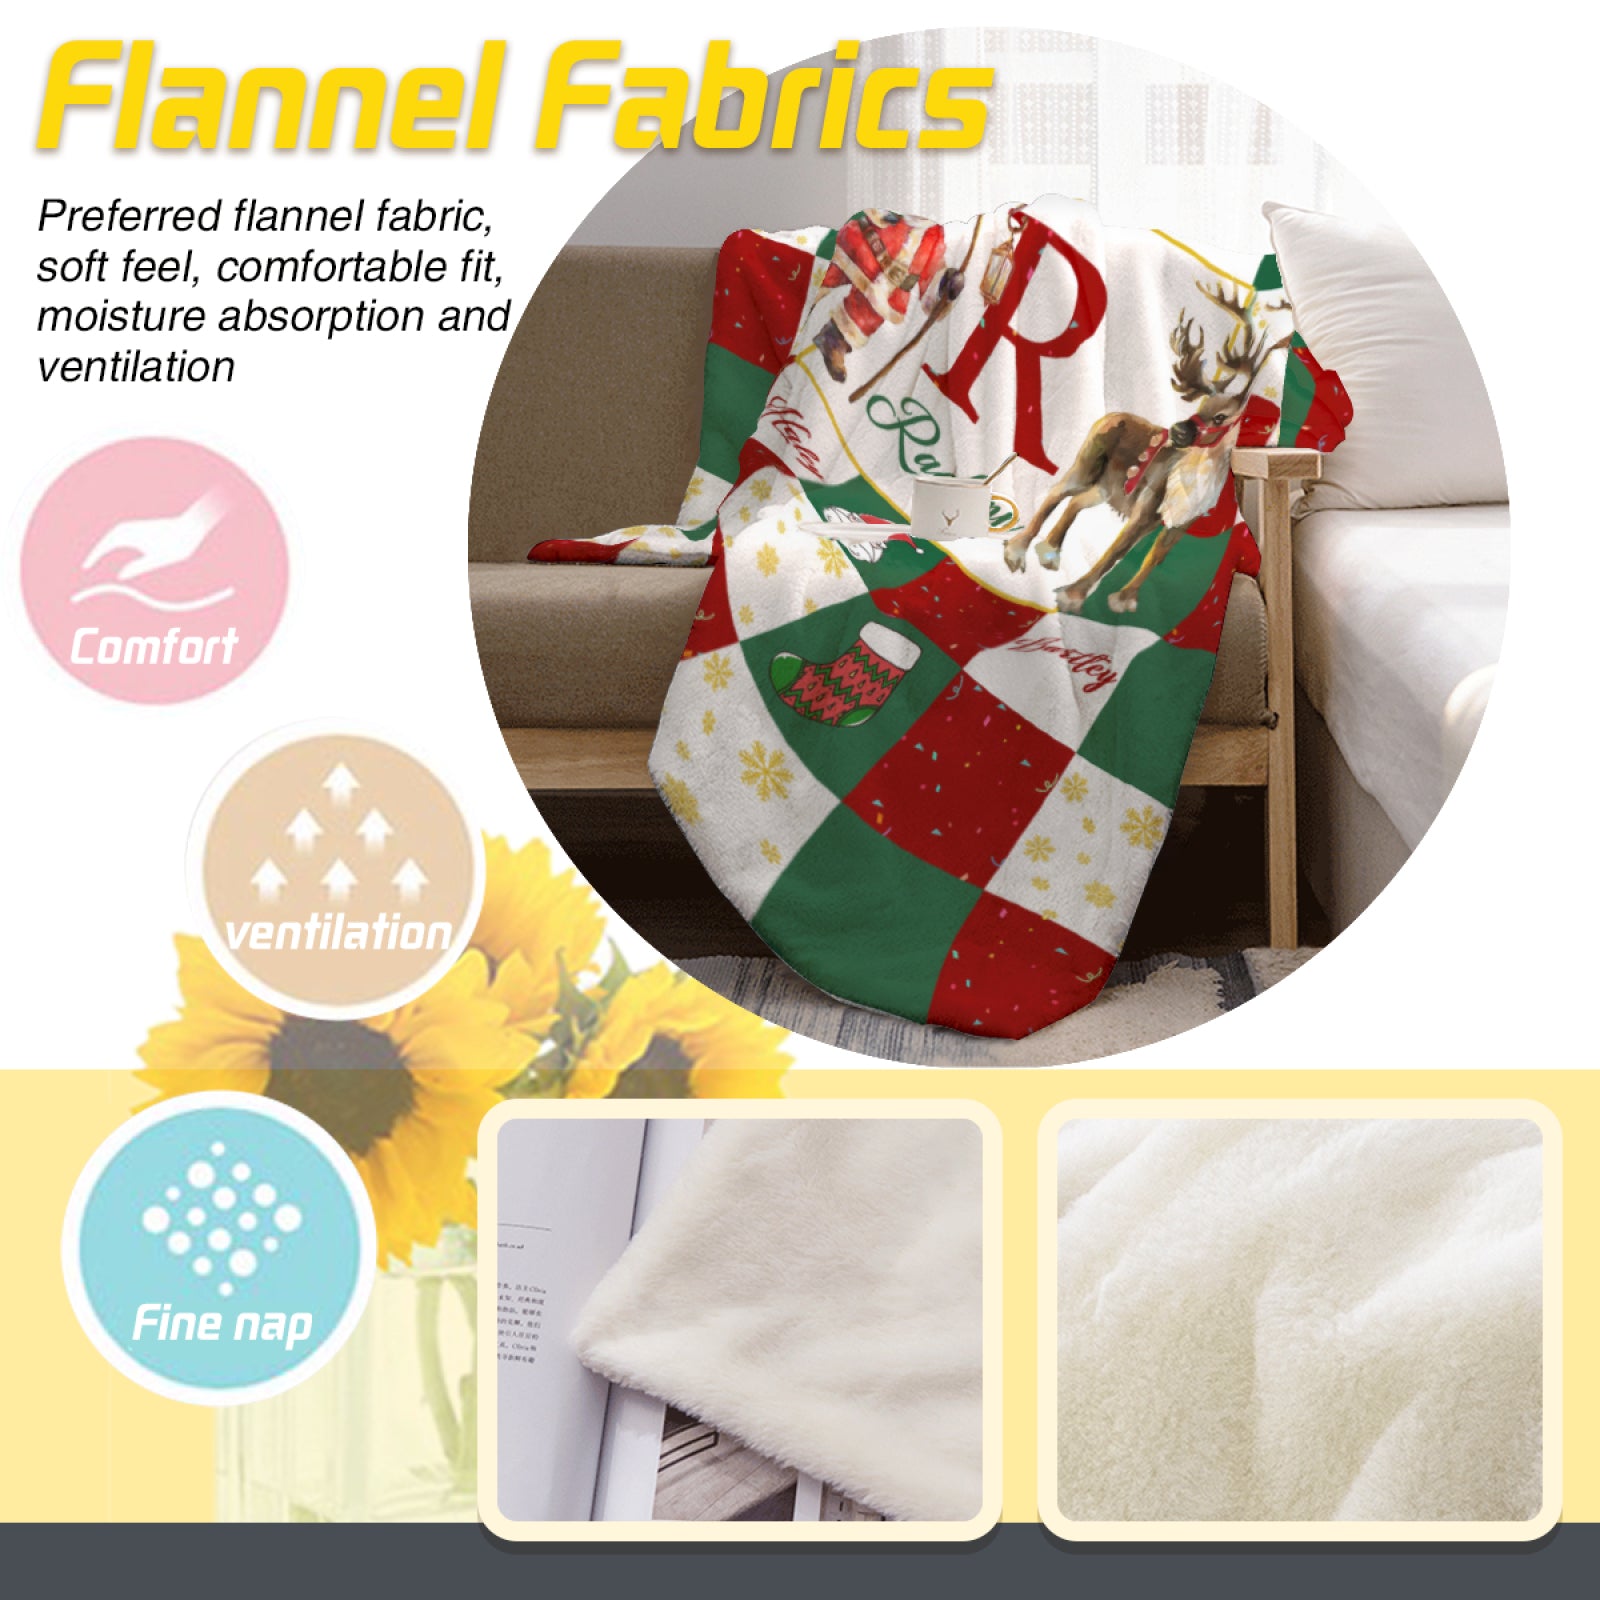 Customizable Photo Blanket, Christmas blanket, Photo blanket gift for him or her, Family & Friends Custom Gifts, Special Memory Keepsake